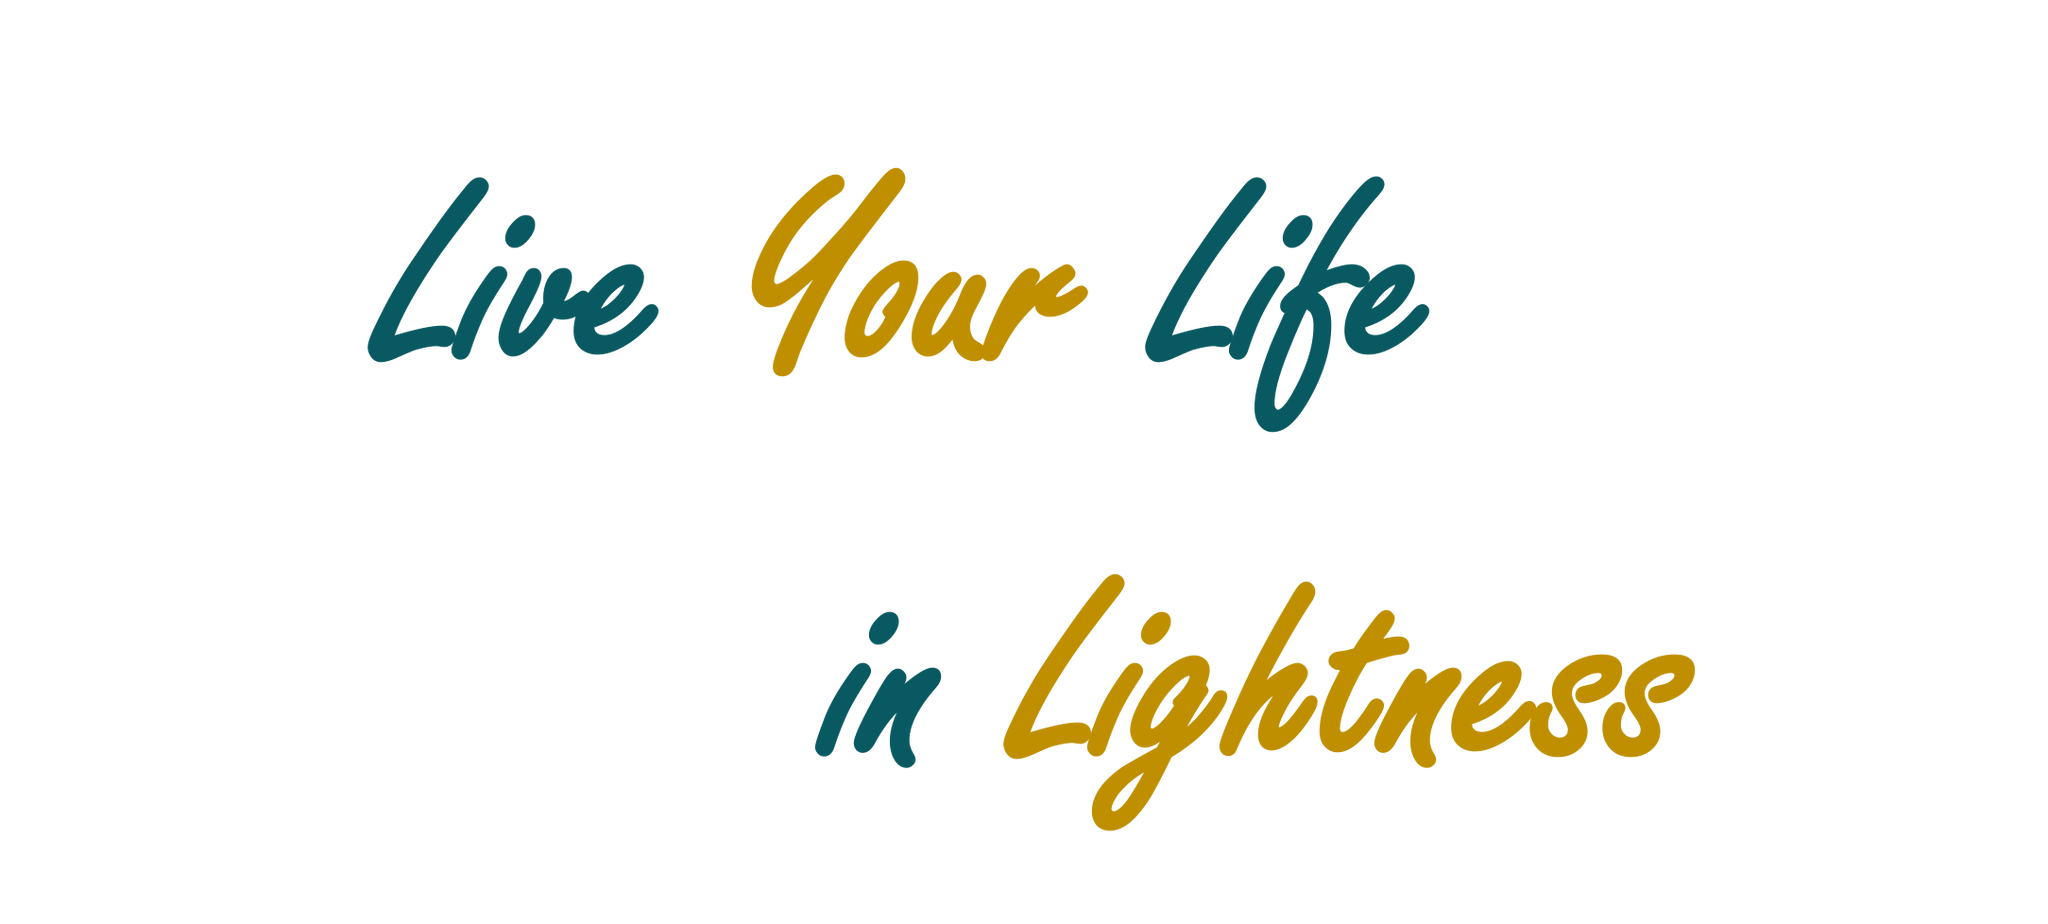 Live Your Life in Lightness Shirt Women